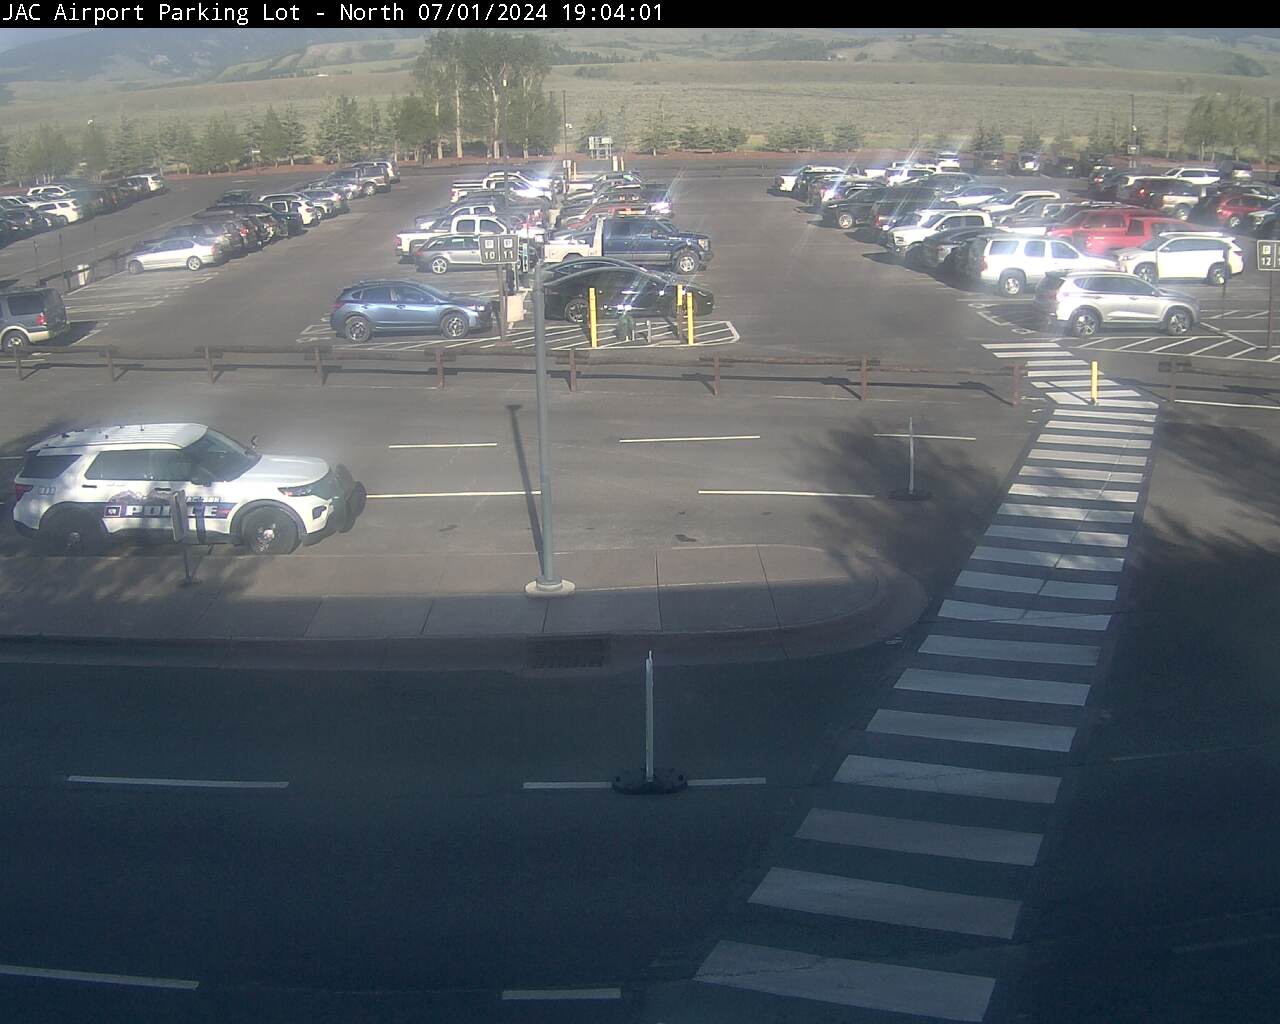 Jackson Hole Airport Webcam - North Parking Lot